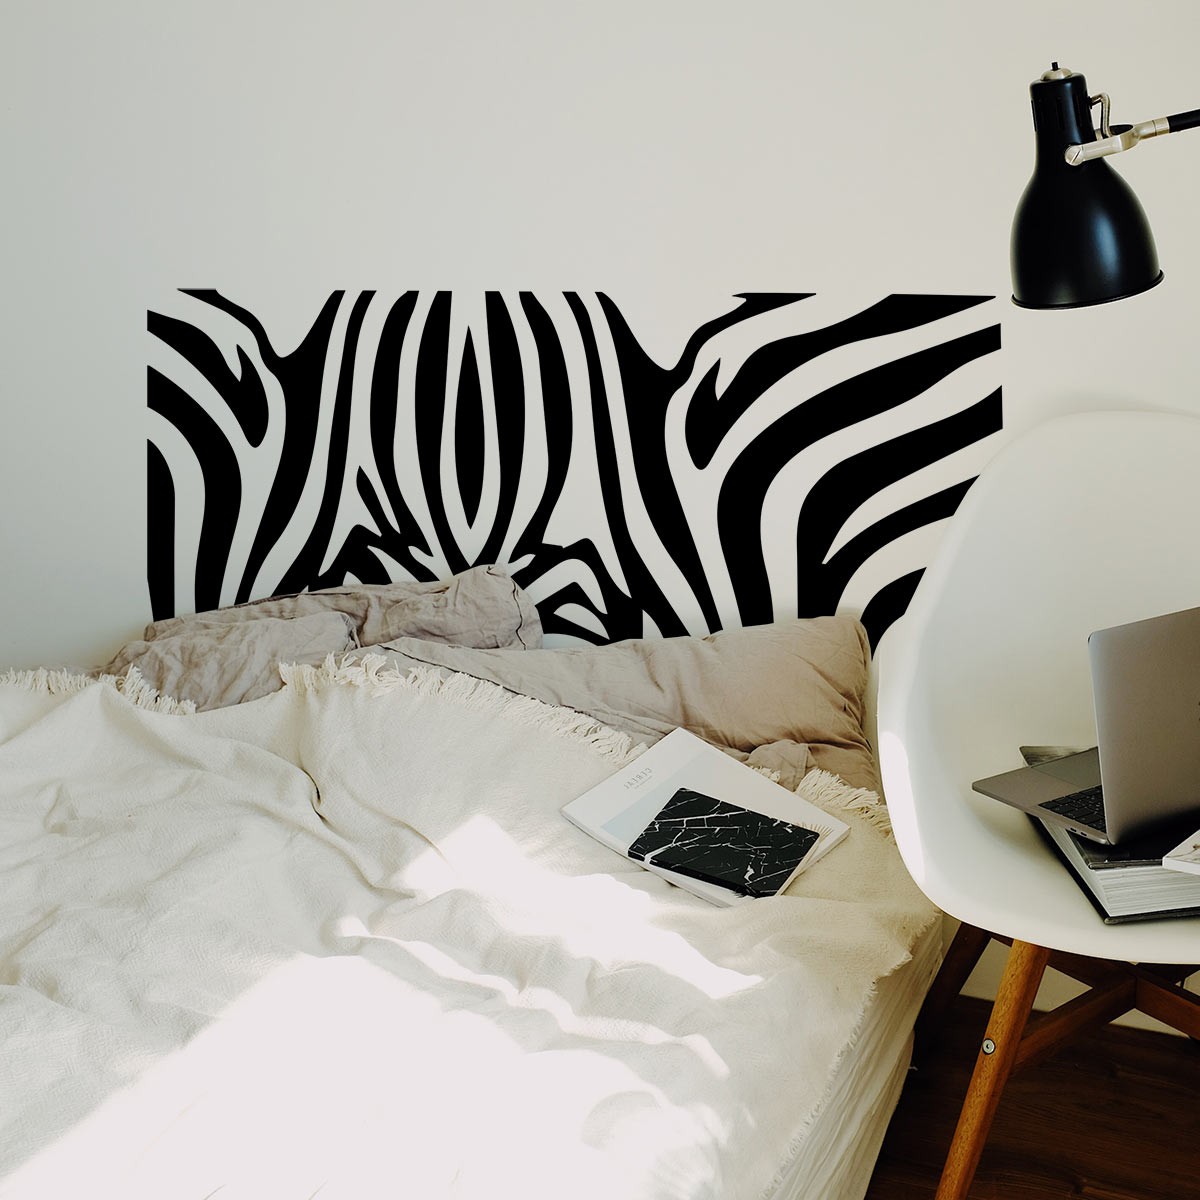 cabezal dormitorio de vinilo decorativo moderno